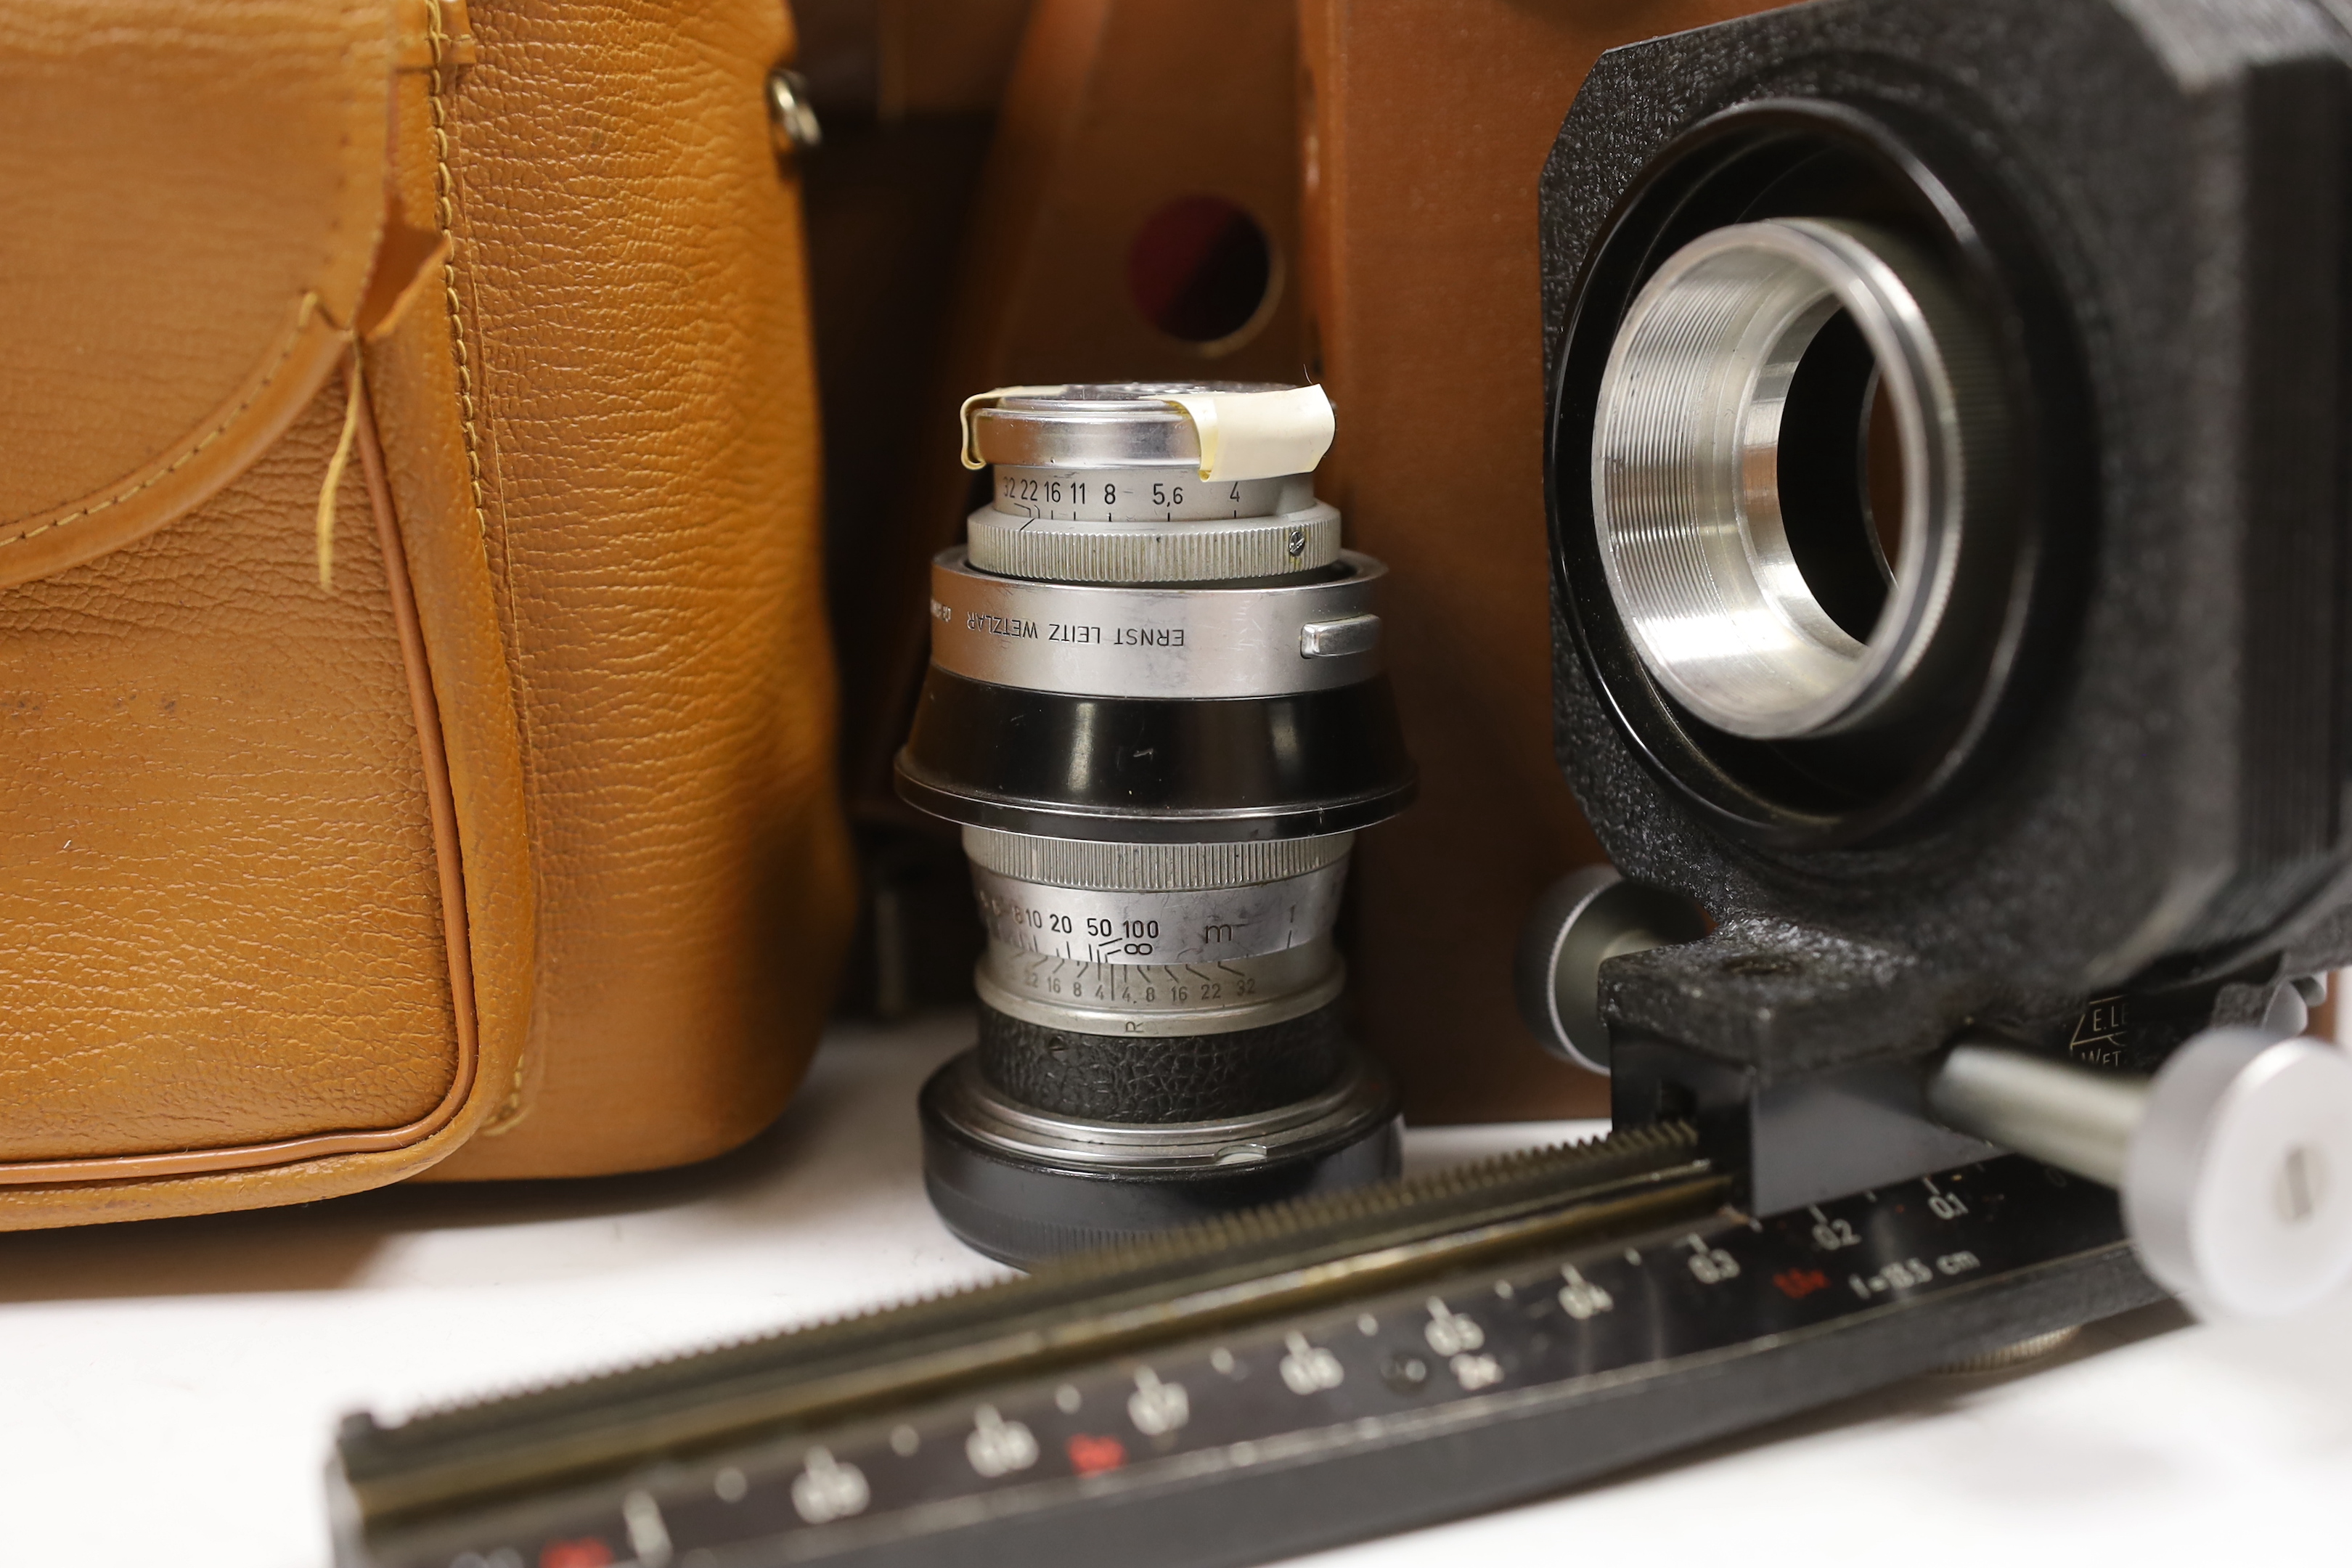 Leica accessories including; a Leitz Visoflex I and Visoflex II, a Summarit f-5cm 1:1.5 lens, an Elmar f=9cm 1:4lens, a Super Angulon 1:4/21 lens, a Range Finder, a Leitz Telyt f=20cm 1:4.5 lens, a Leitz Telyt SFT00 view